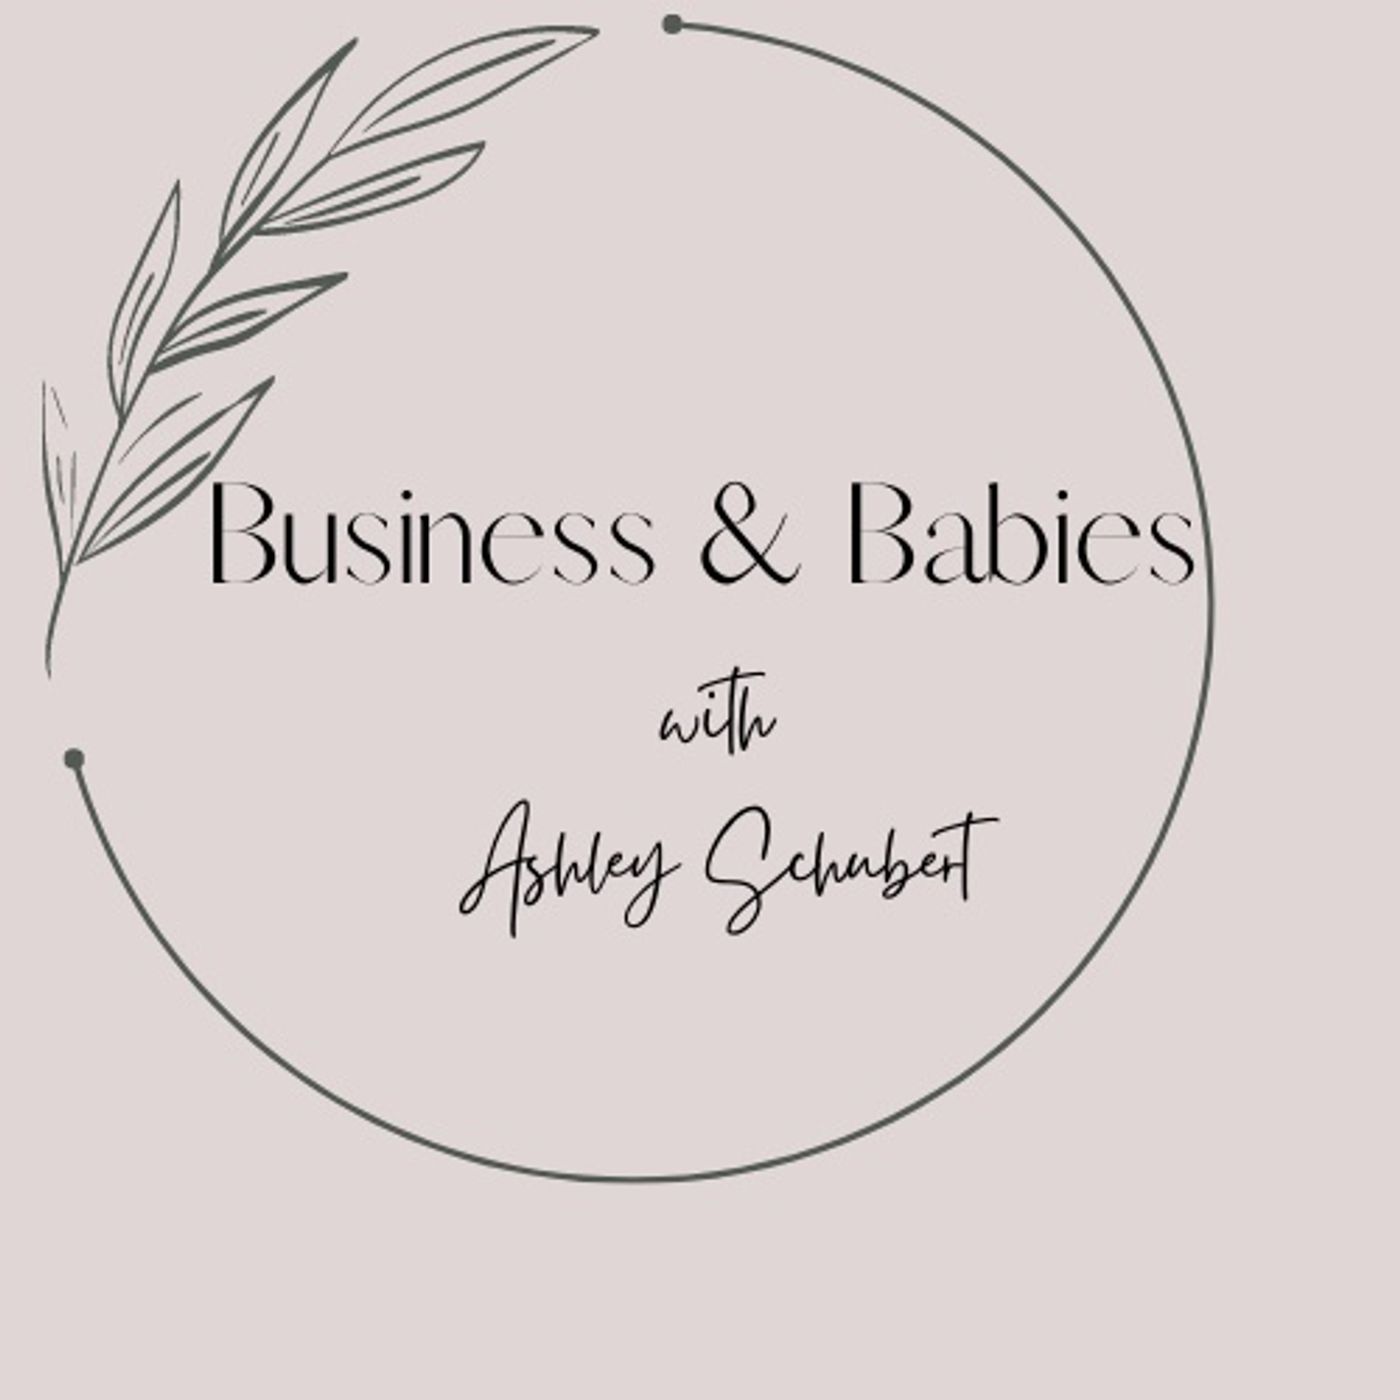 Business & Babies with Ashley Schubert